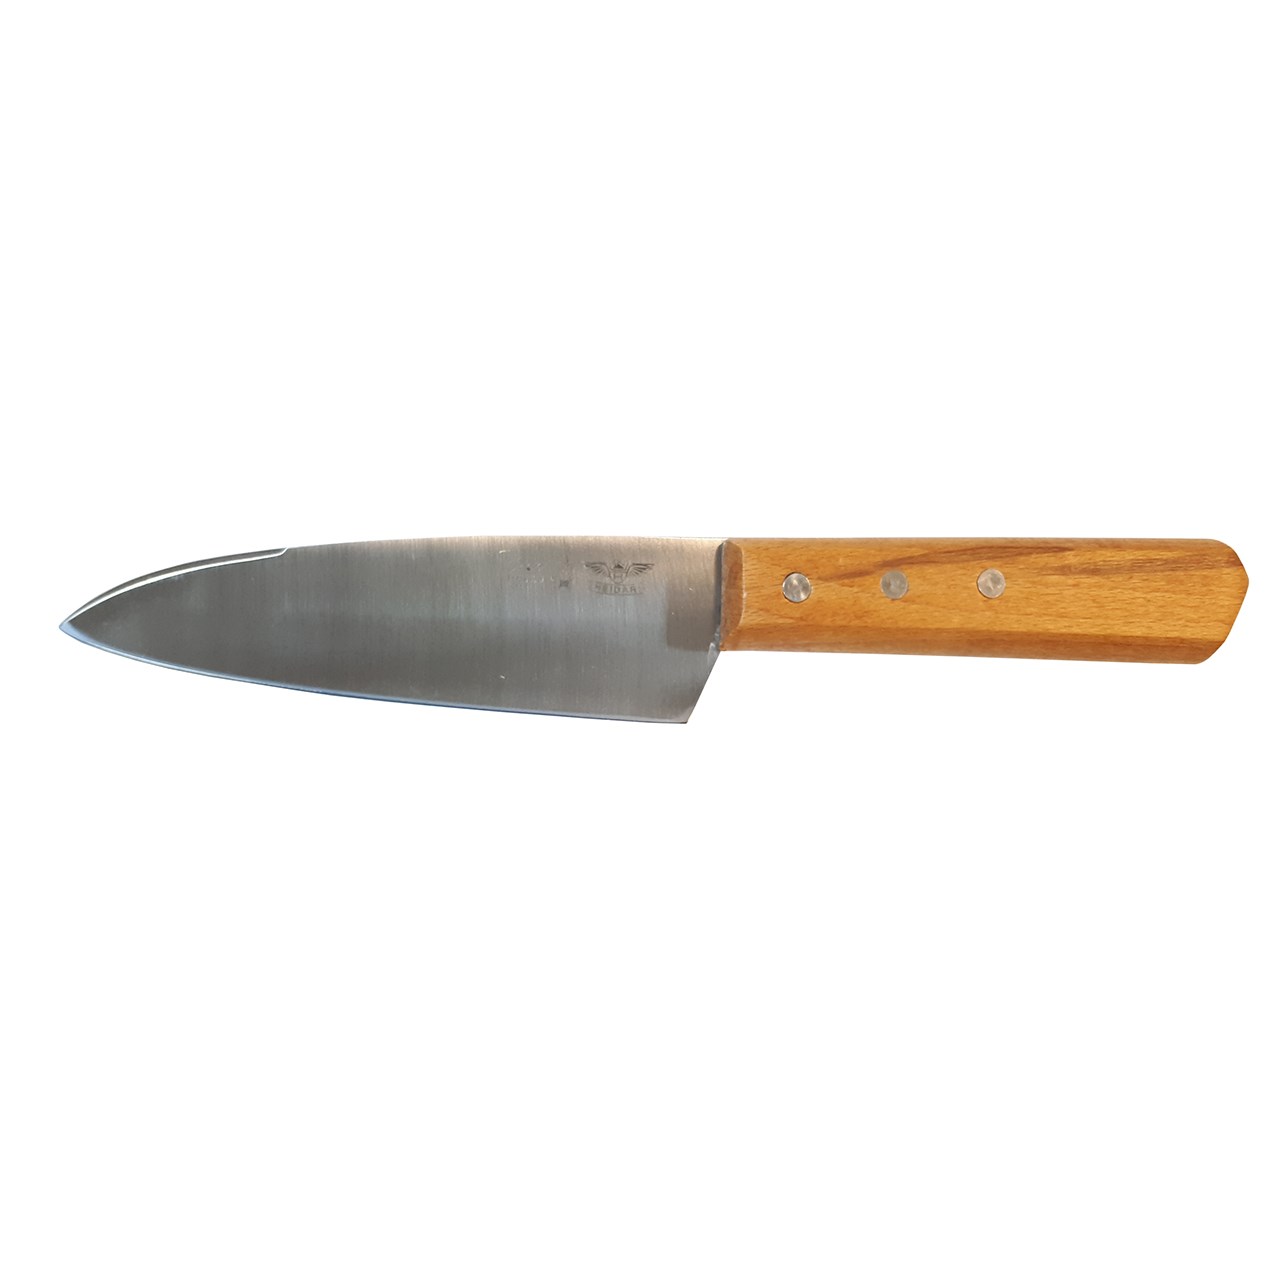 چاقوی آشپزخانه حیدری مدل راسته سایز 2